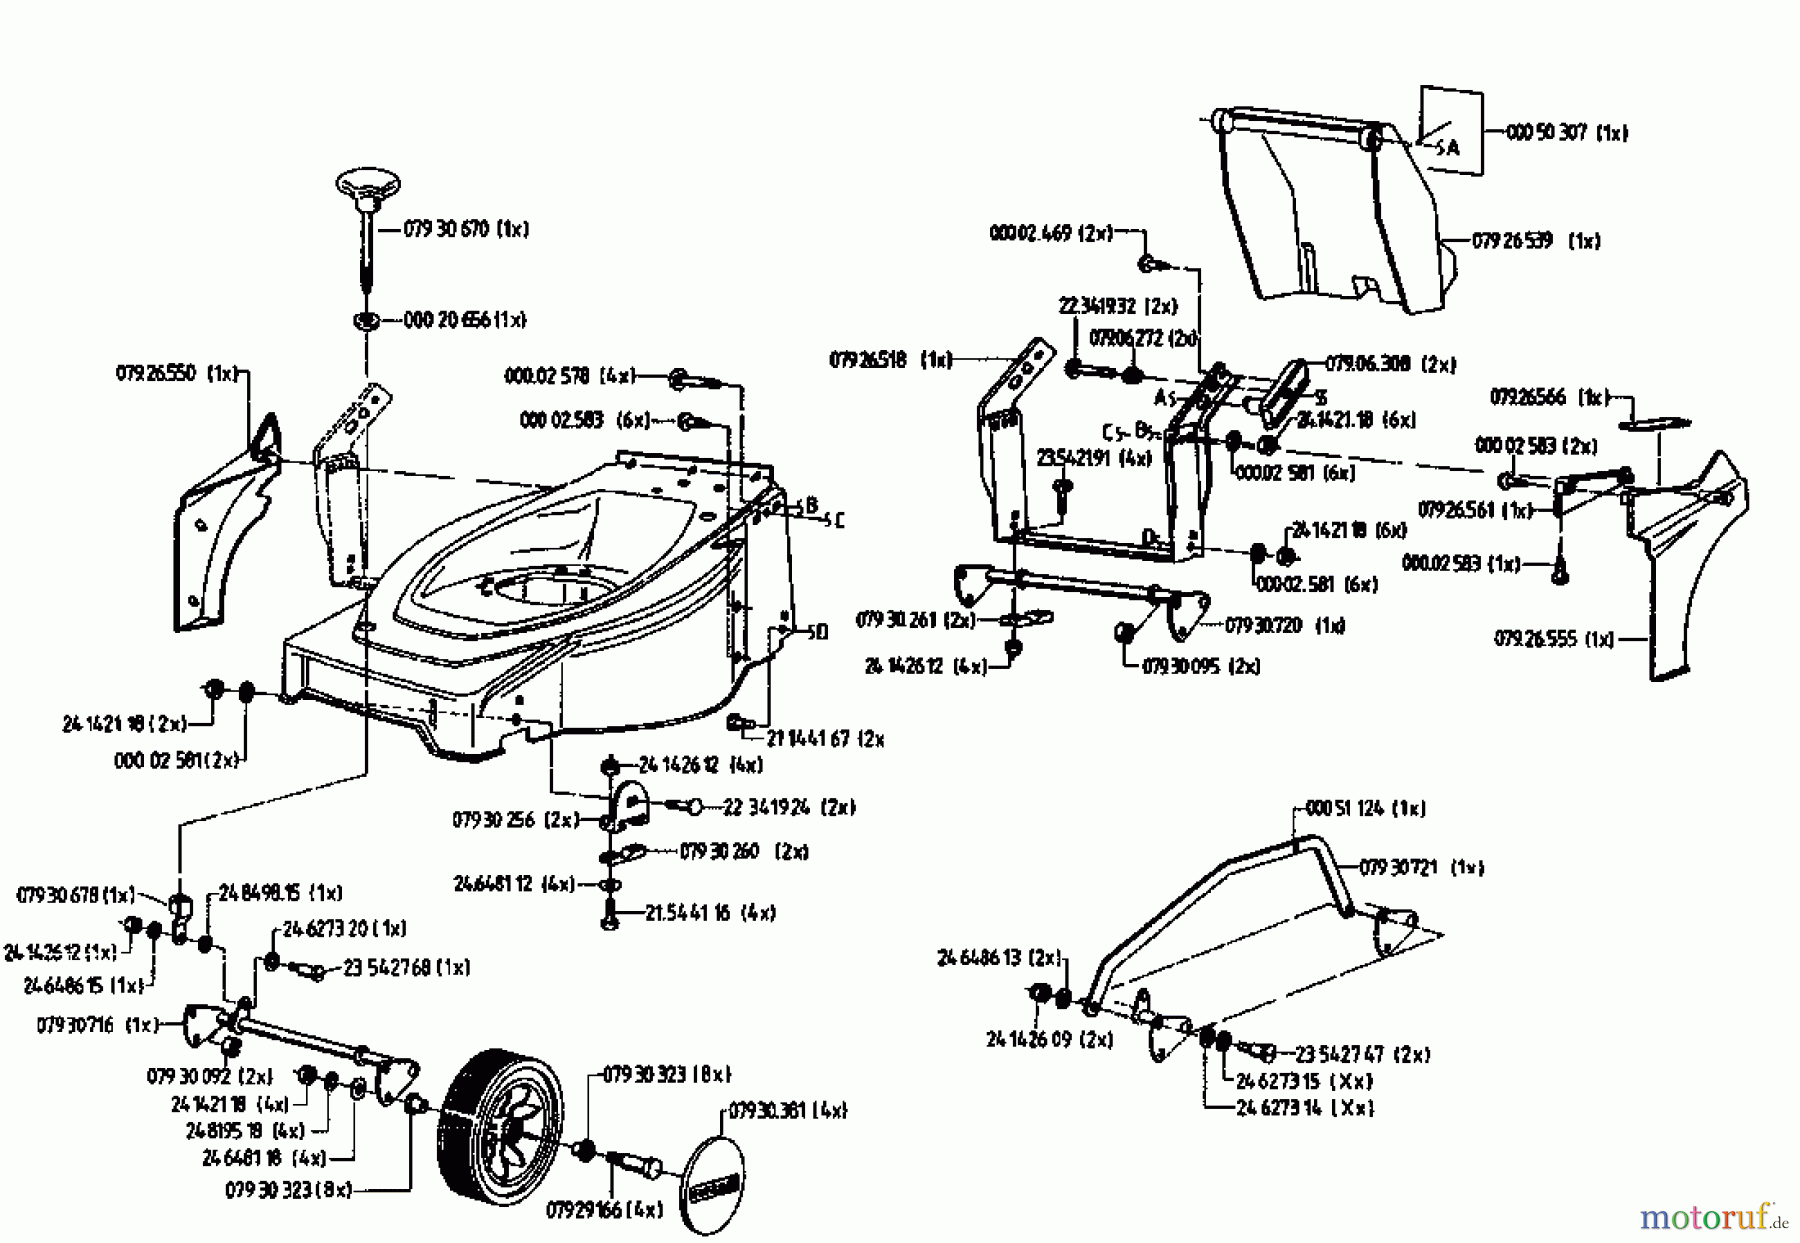  Gutbrod Petrol mower HB 42 LE 04028.03  (1995) Basic machine